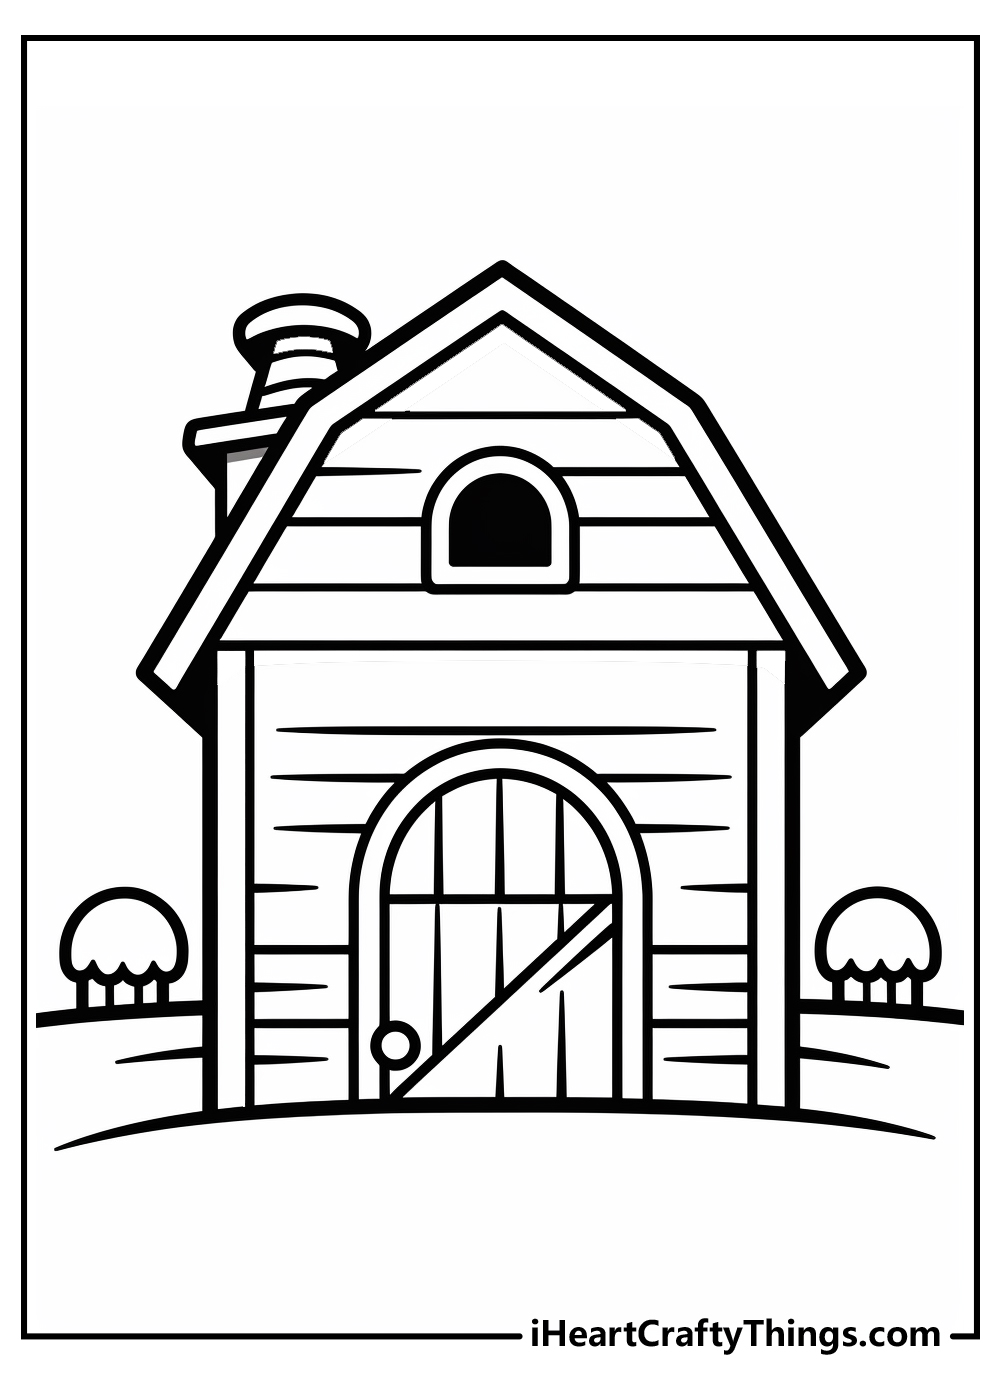 new barn coloring sheet free download